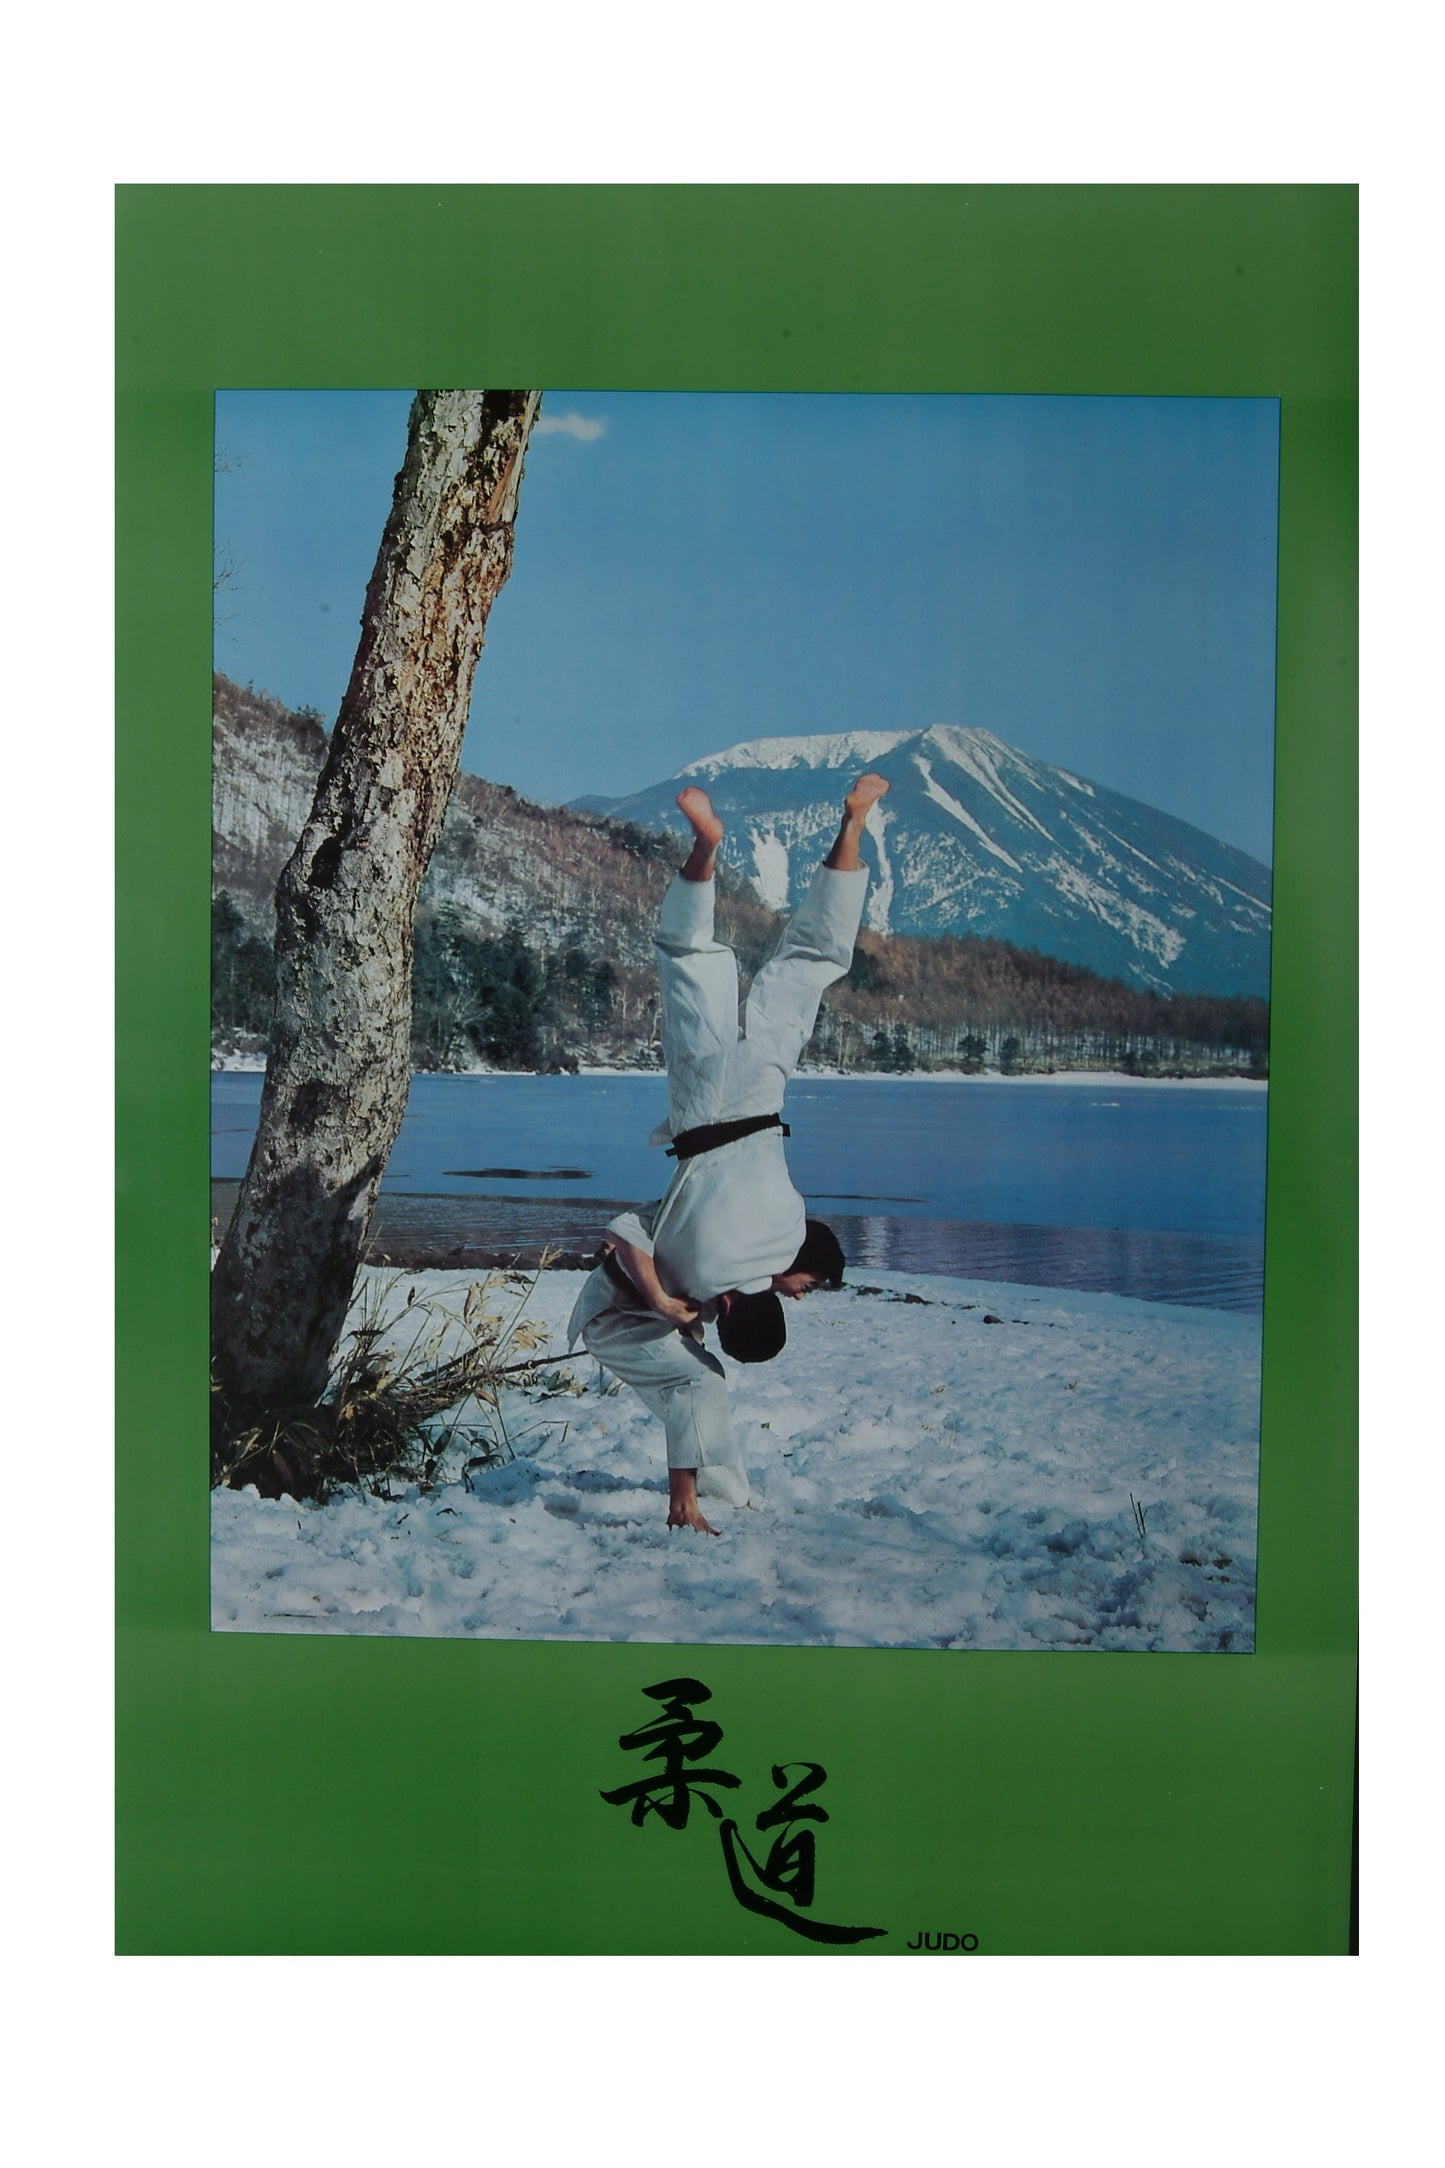 Judo Poster